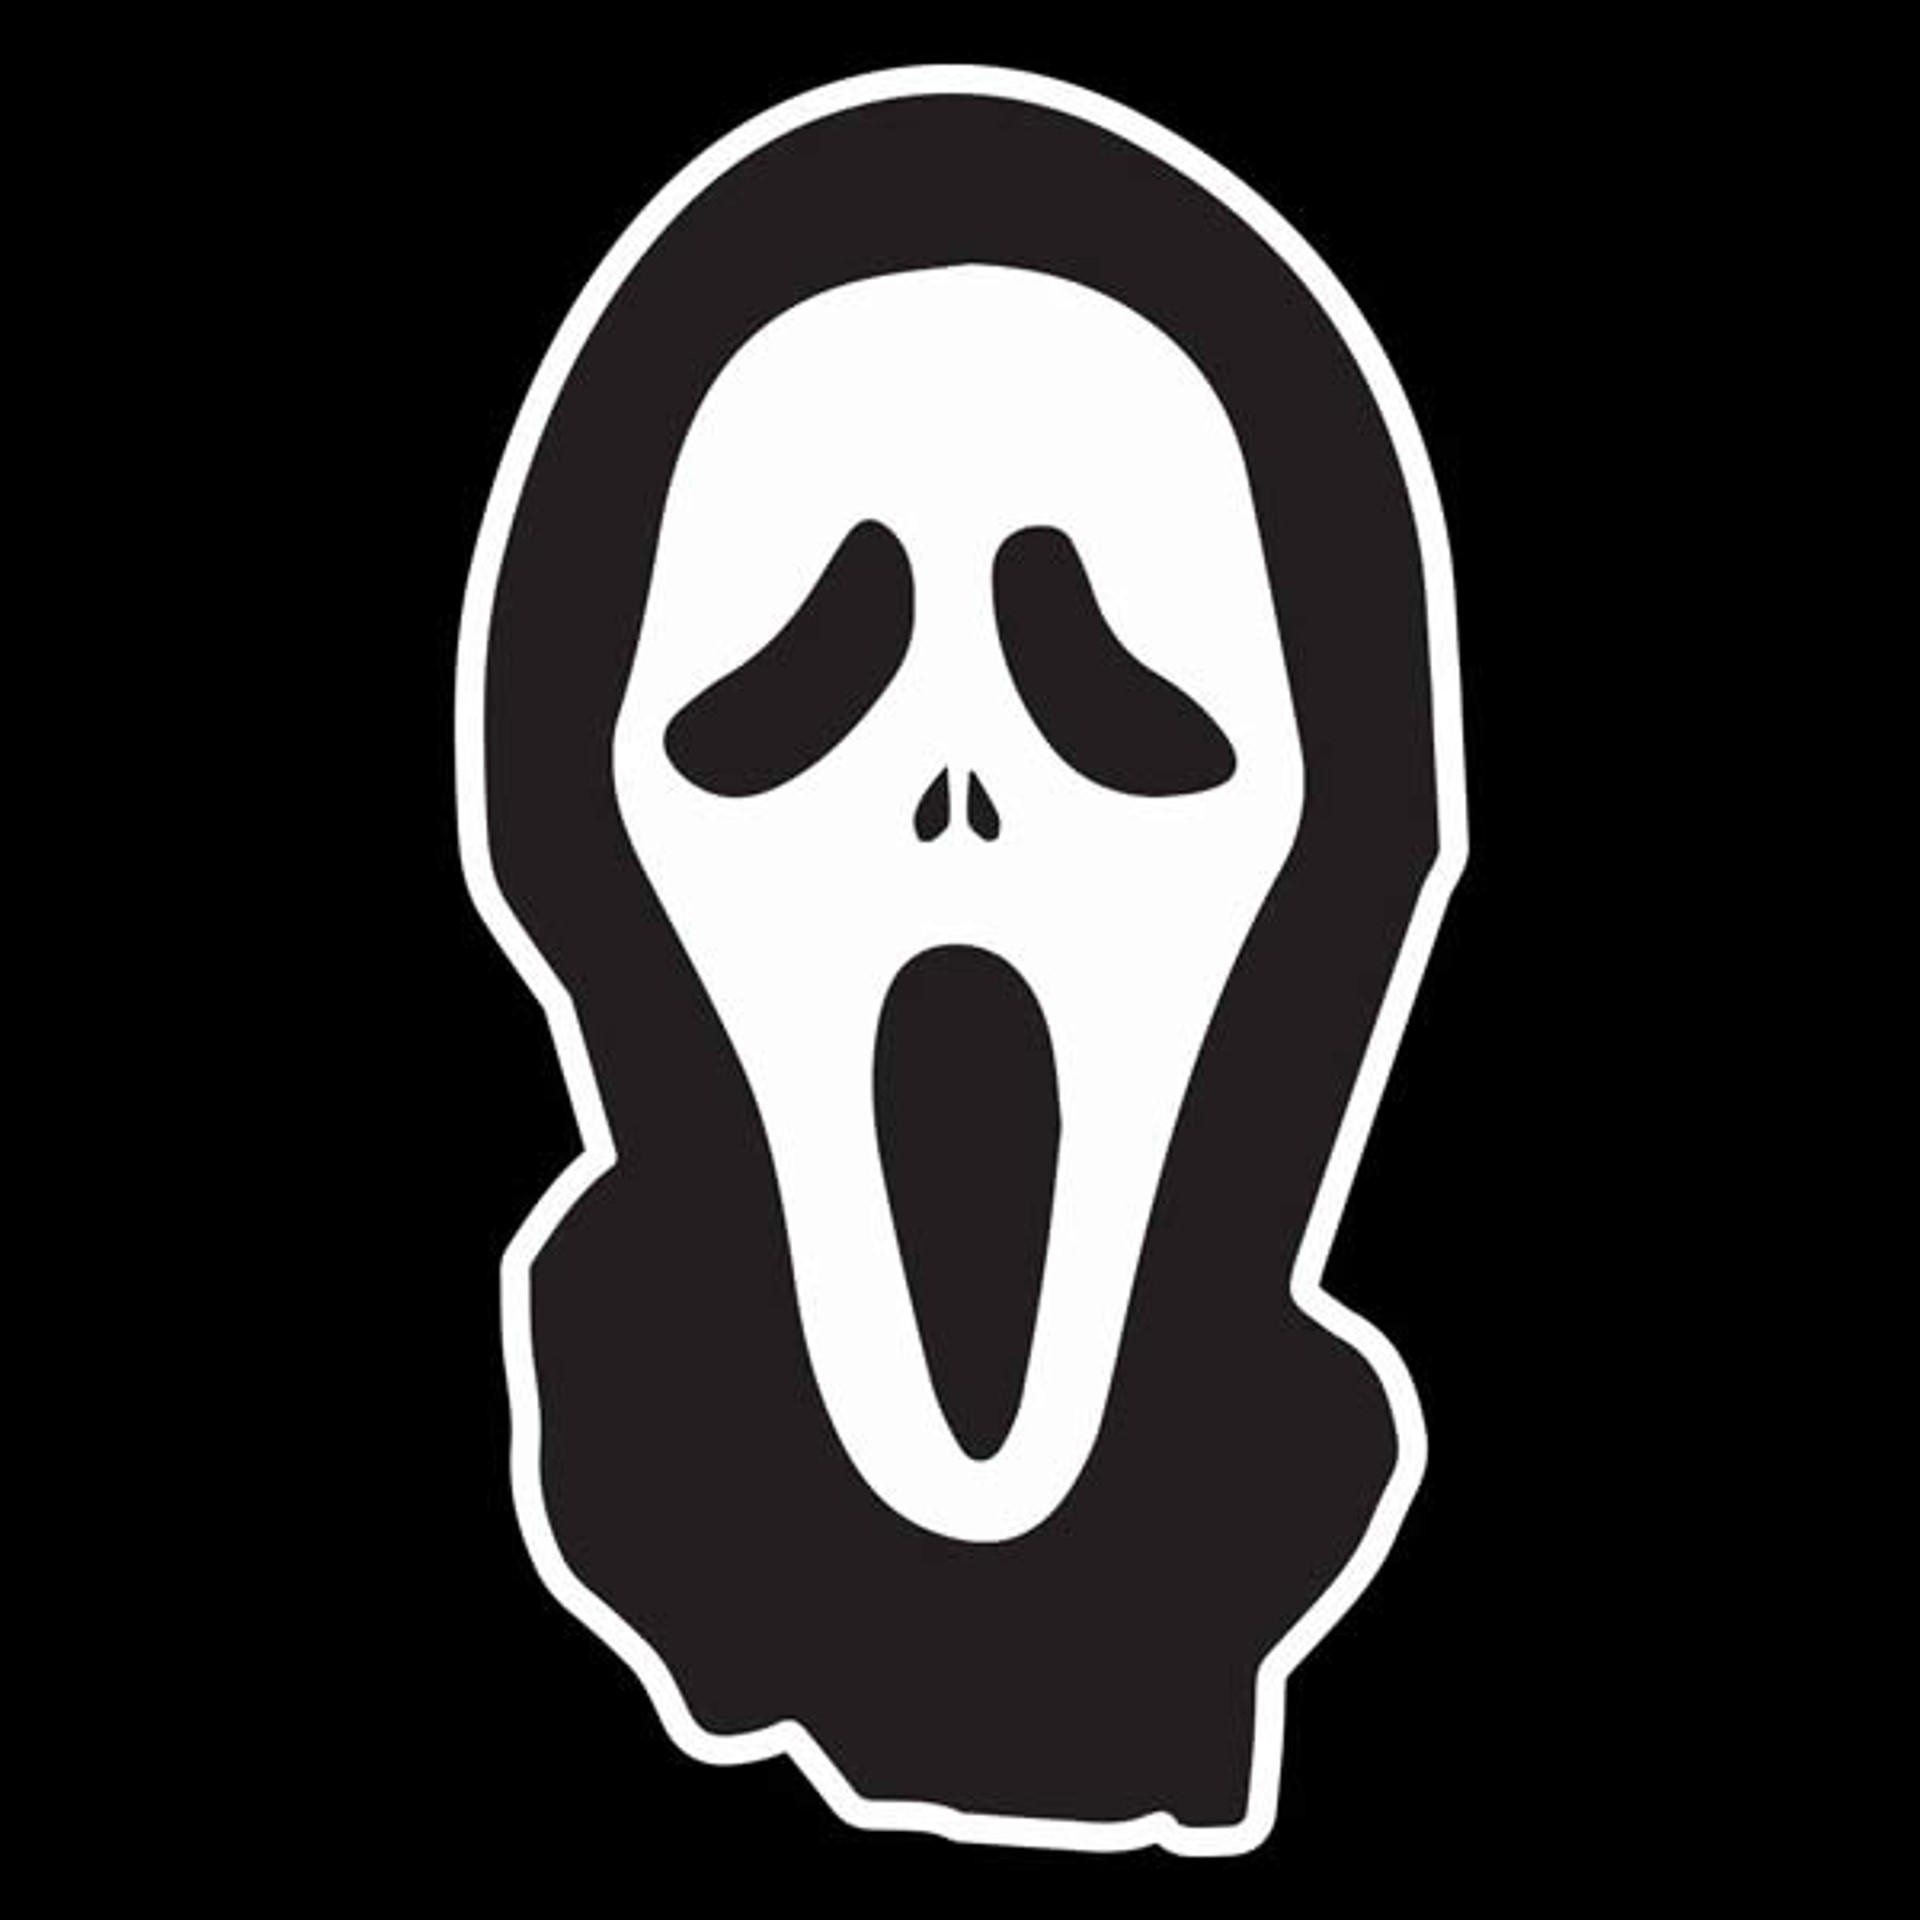 Woodsboro Ghosts Ghostface Hockey Jersey